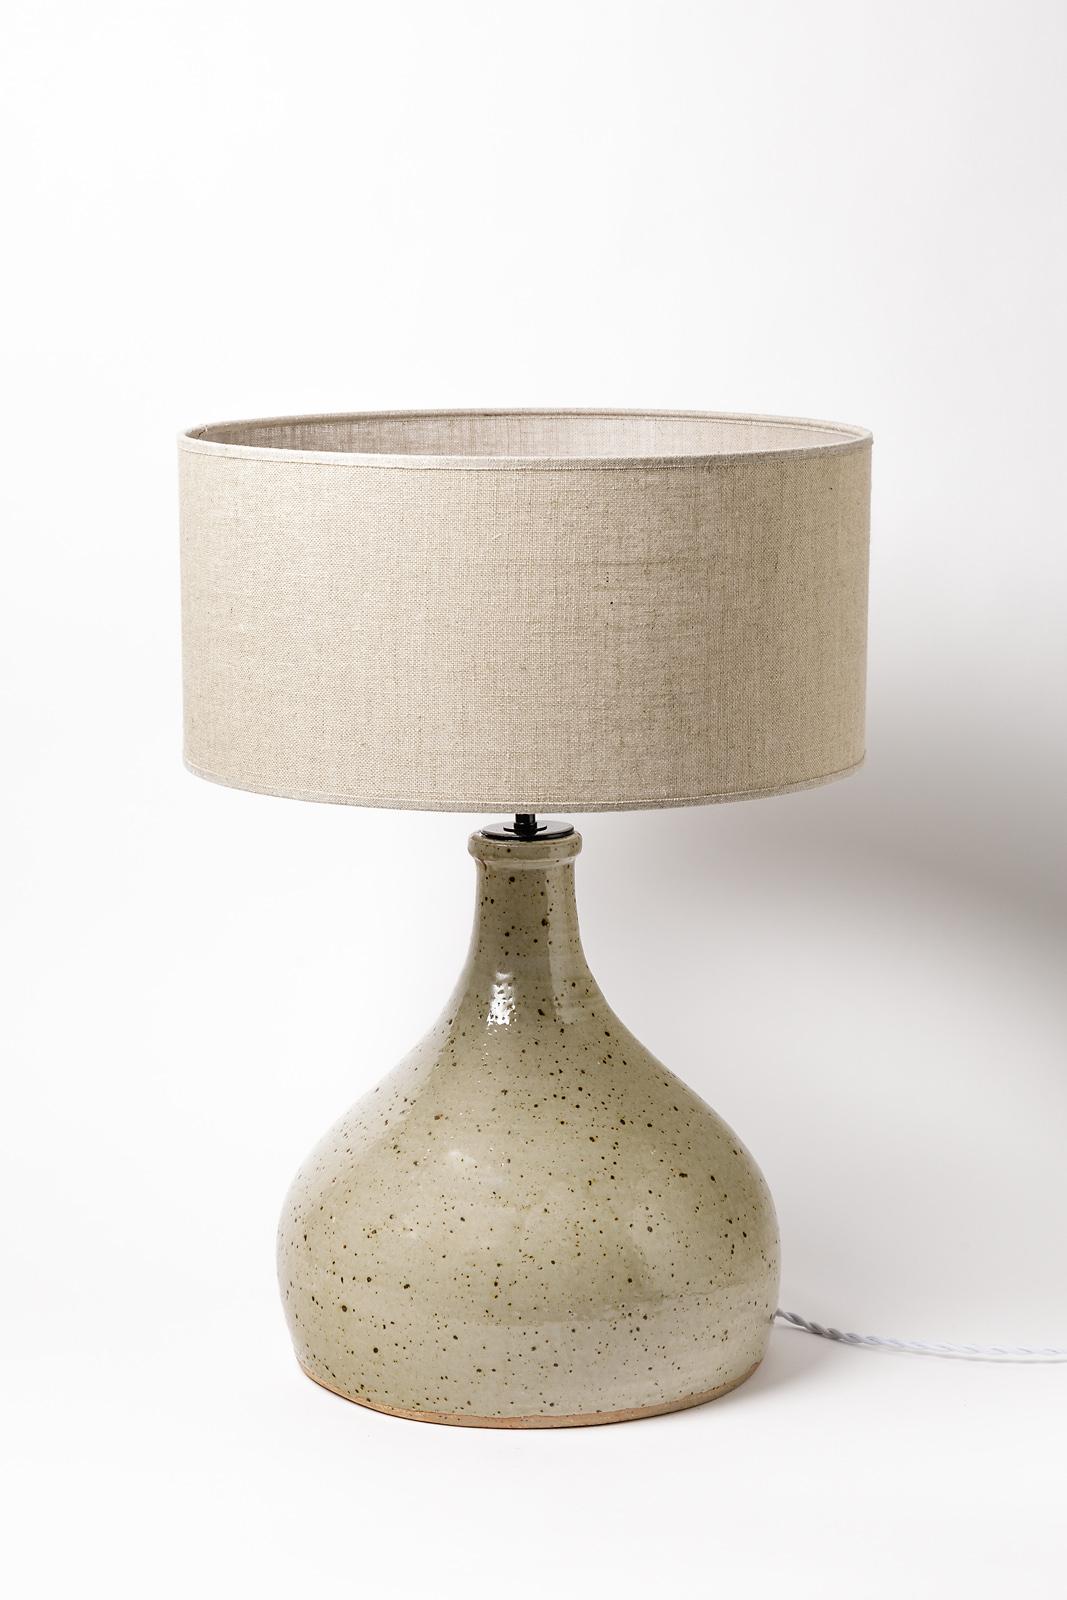 Mid-Century Modern Large grey handmade stoneware ceramic table lamp by Migeon La Borne 1979  For Sale